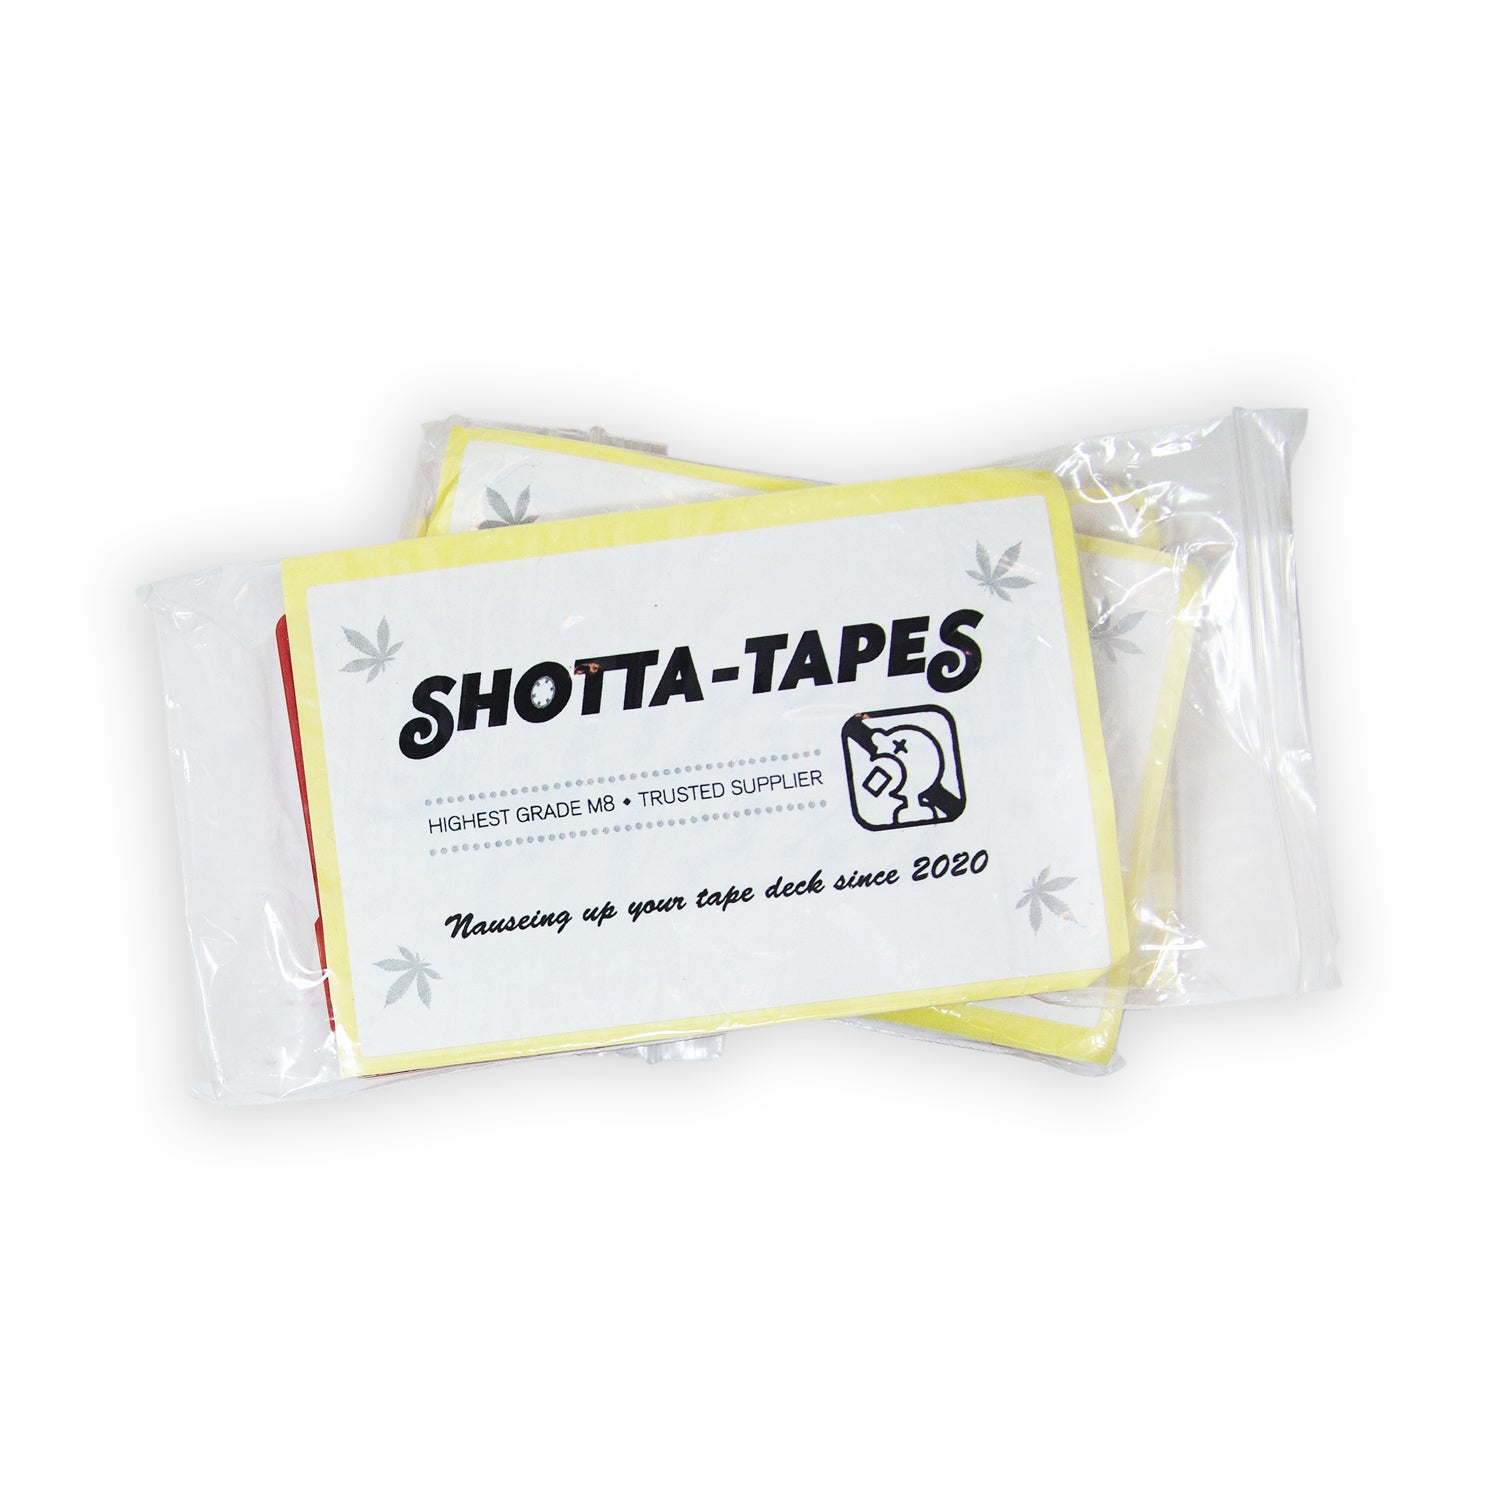 Shotta-tapes-004-main